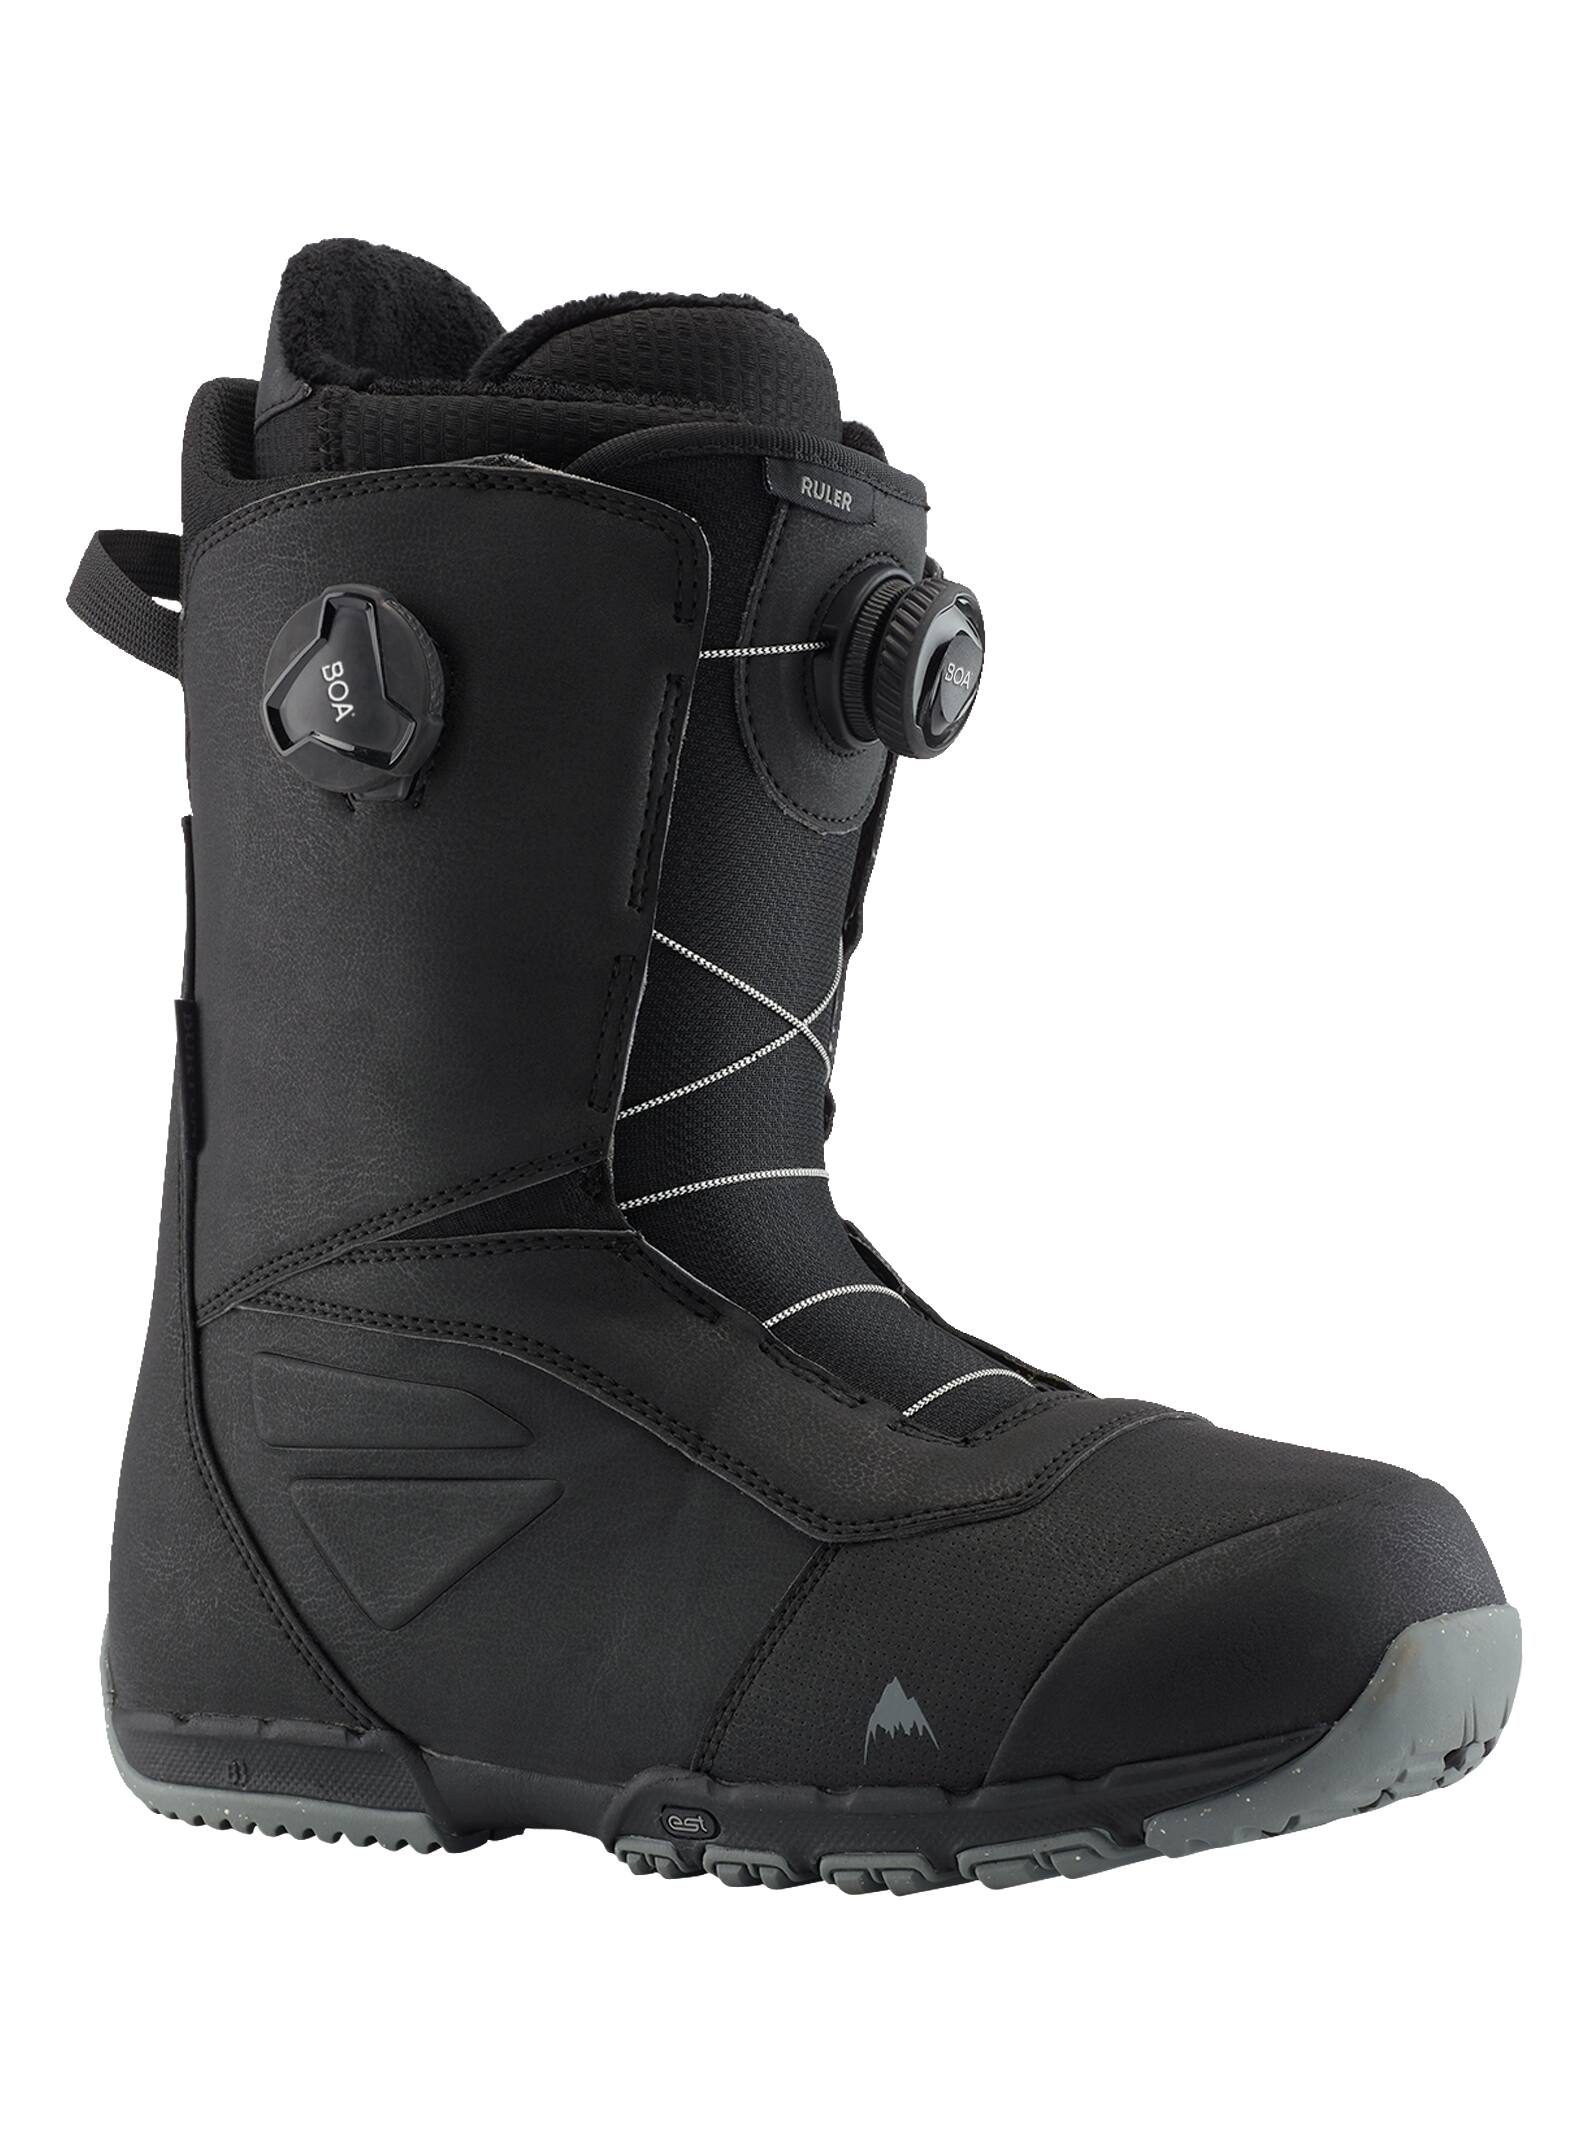 Burton - Boots de snowboard Ruler Boa® homme, Black, 10